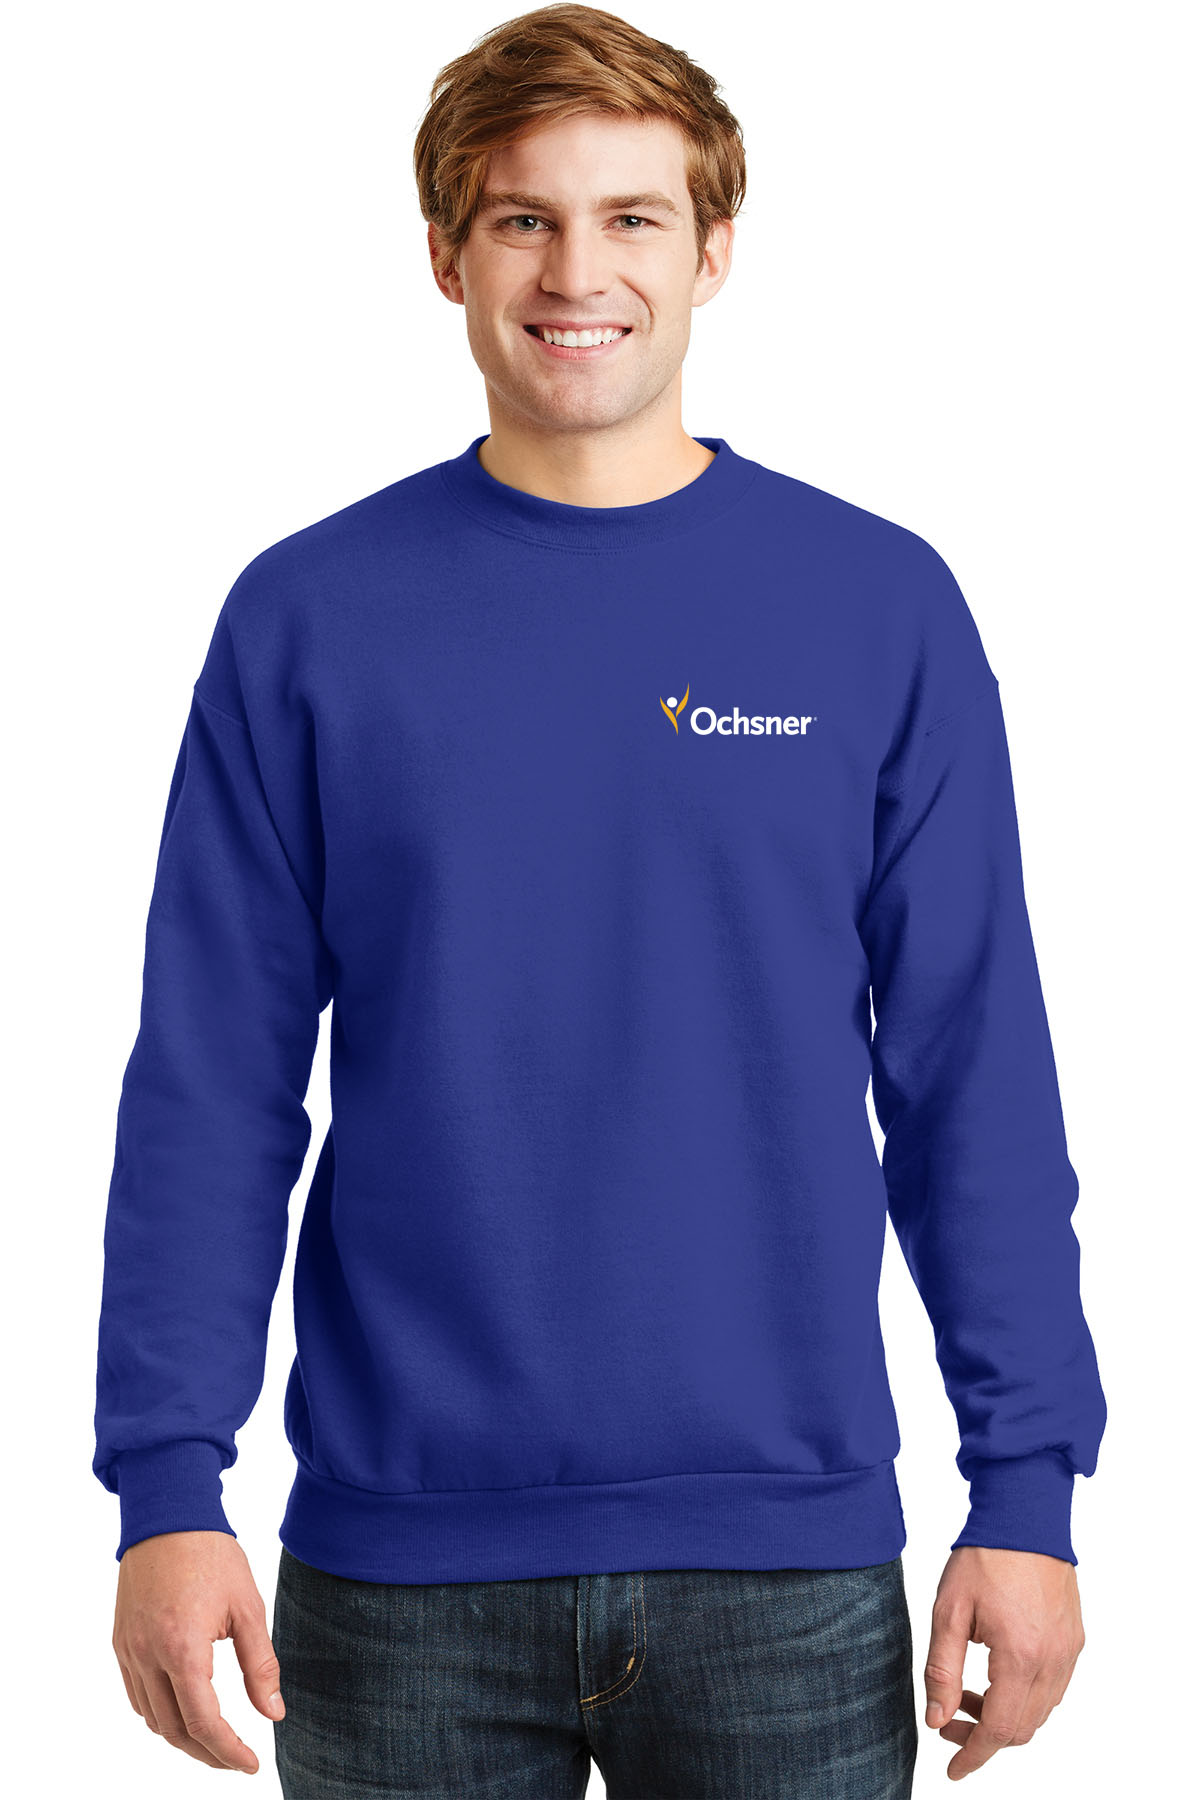 Hanes Unisex Ecosmart Sweatshirt, , large image number 2